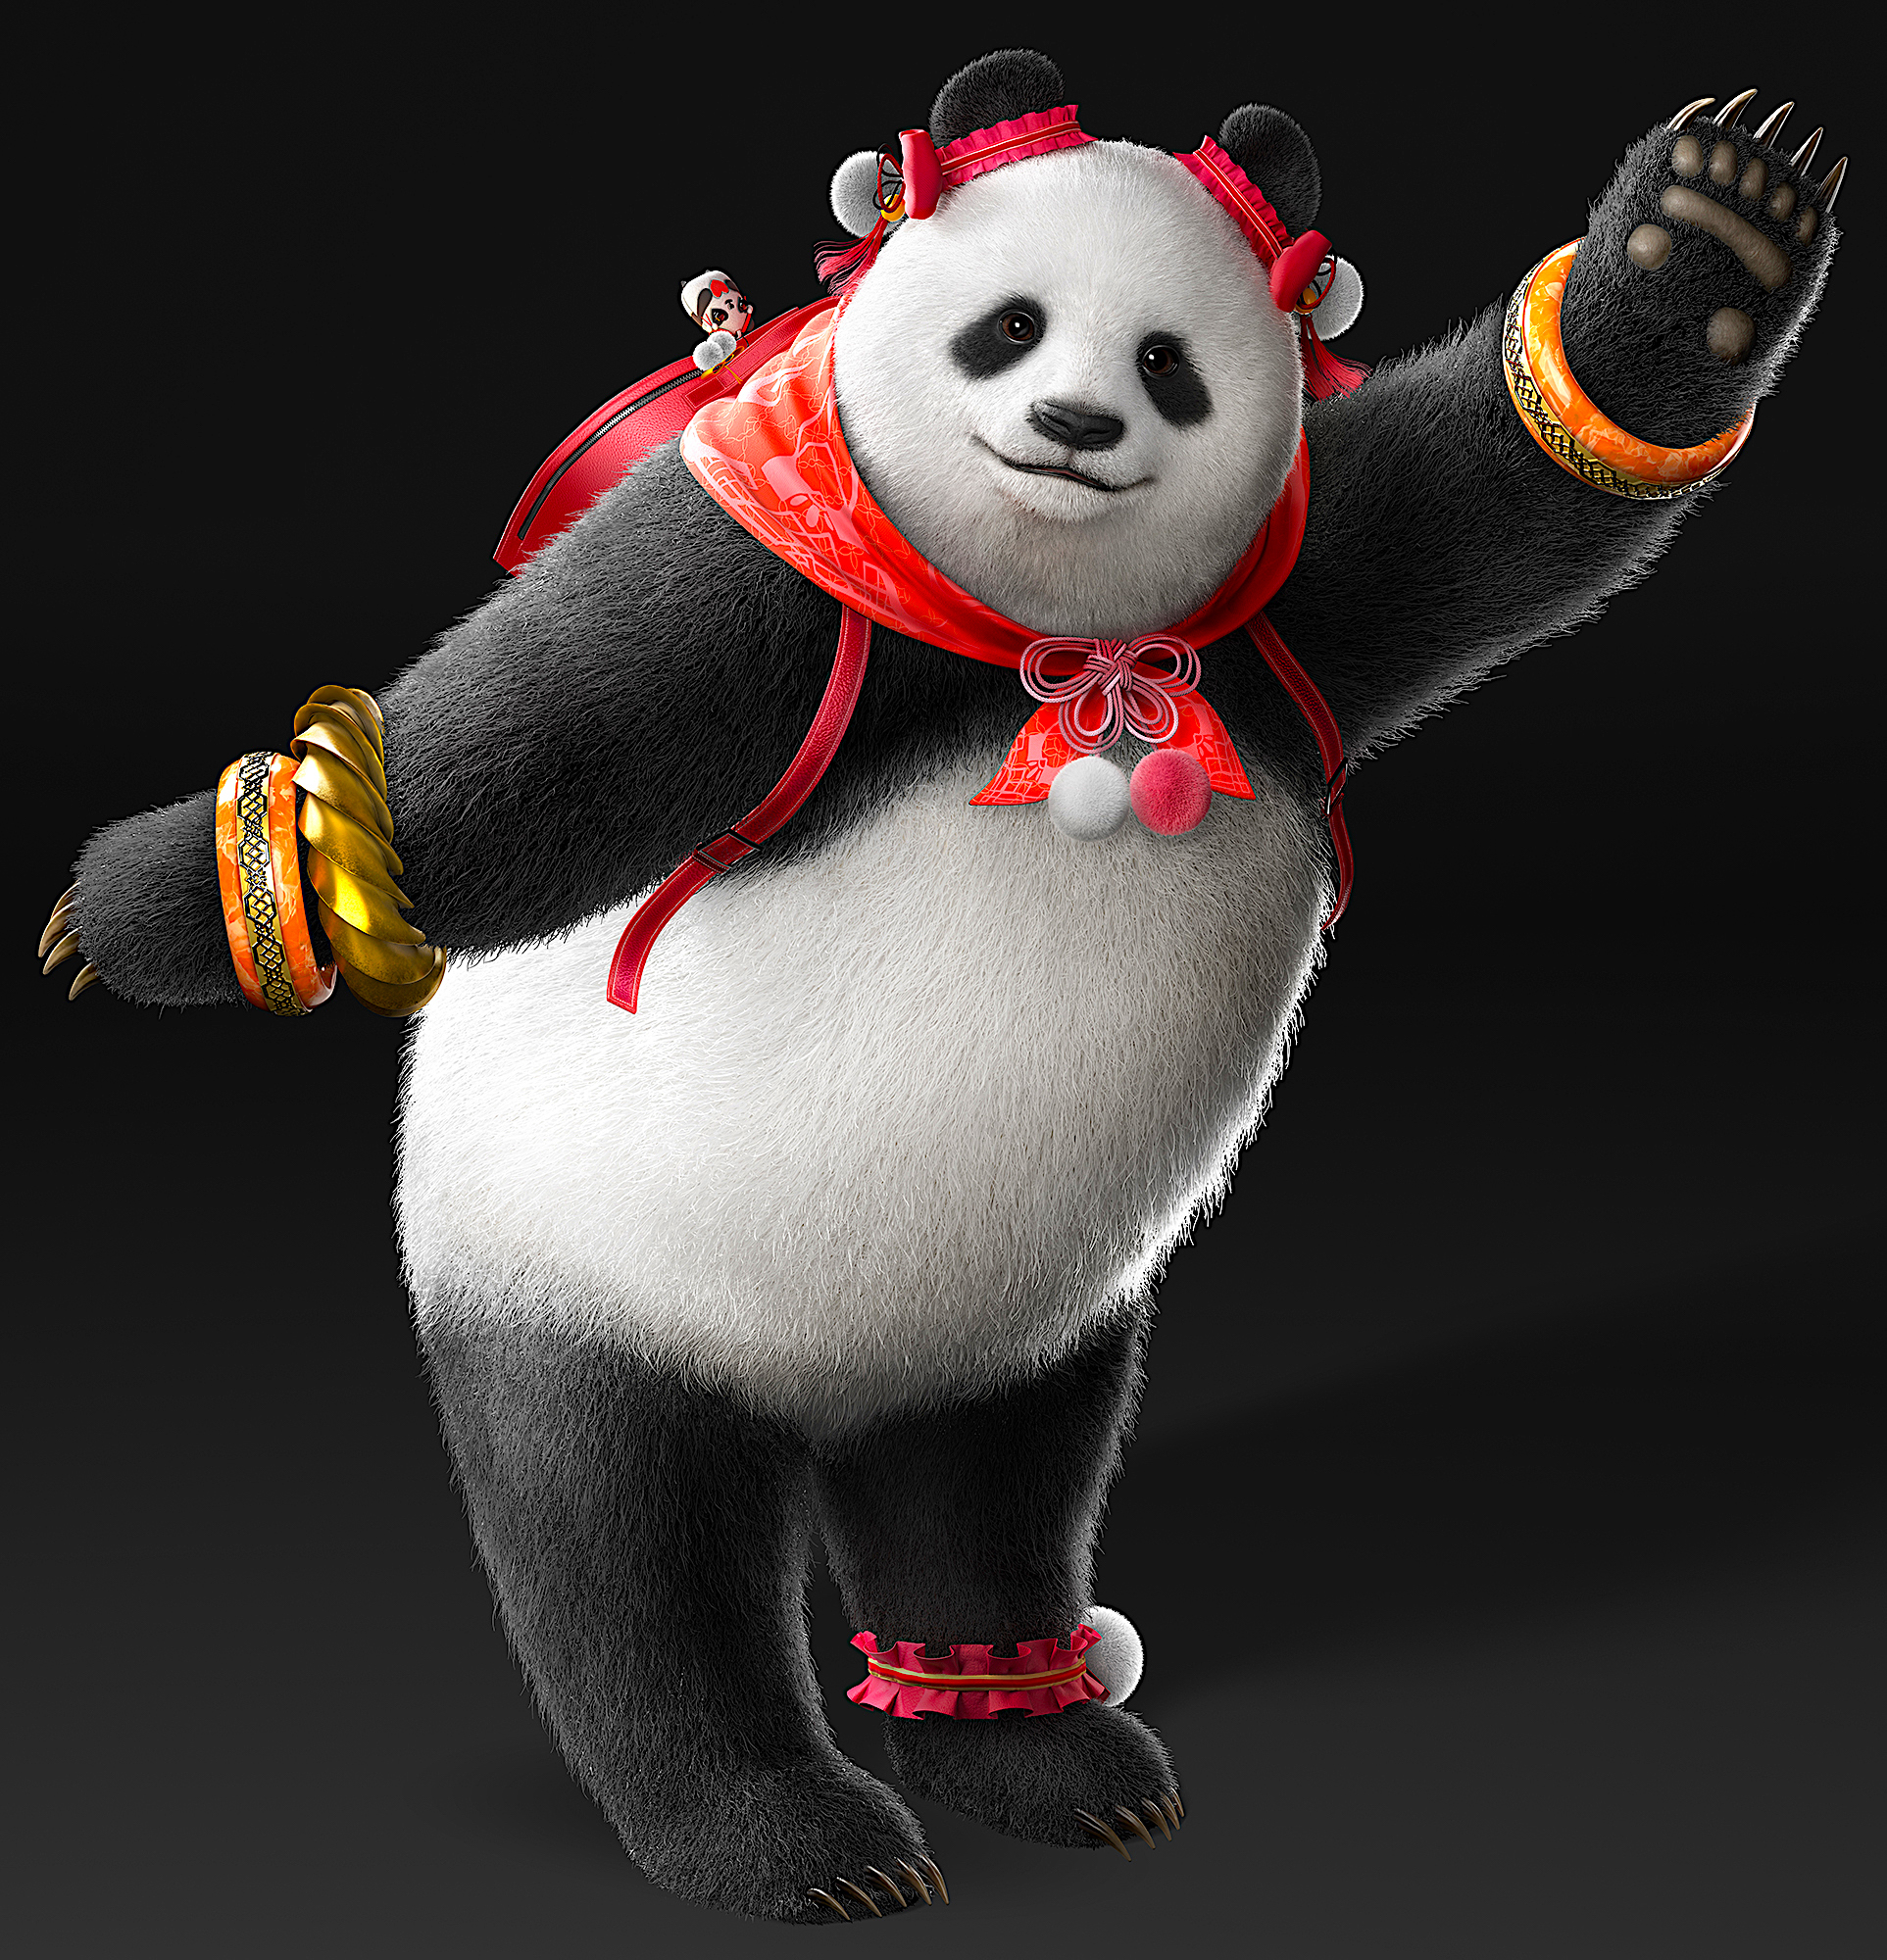 Dr. Panda - 9 Story Media Group